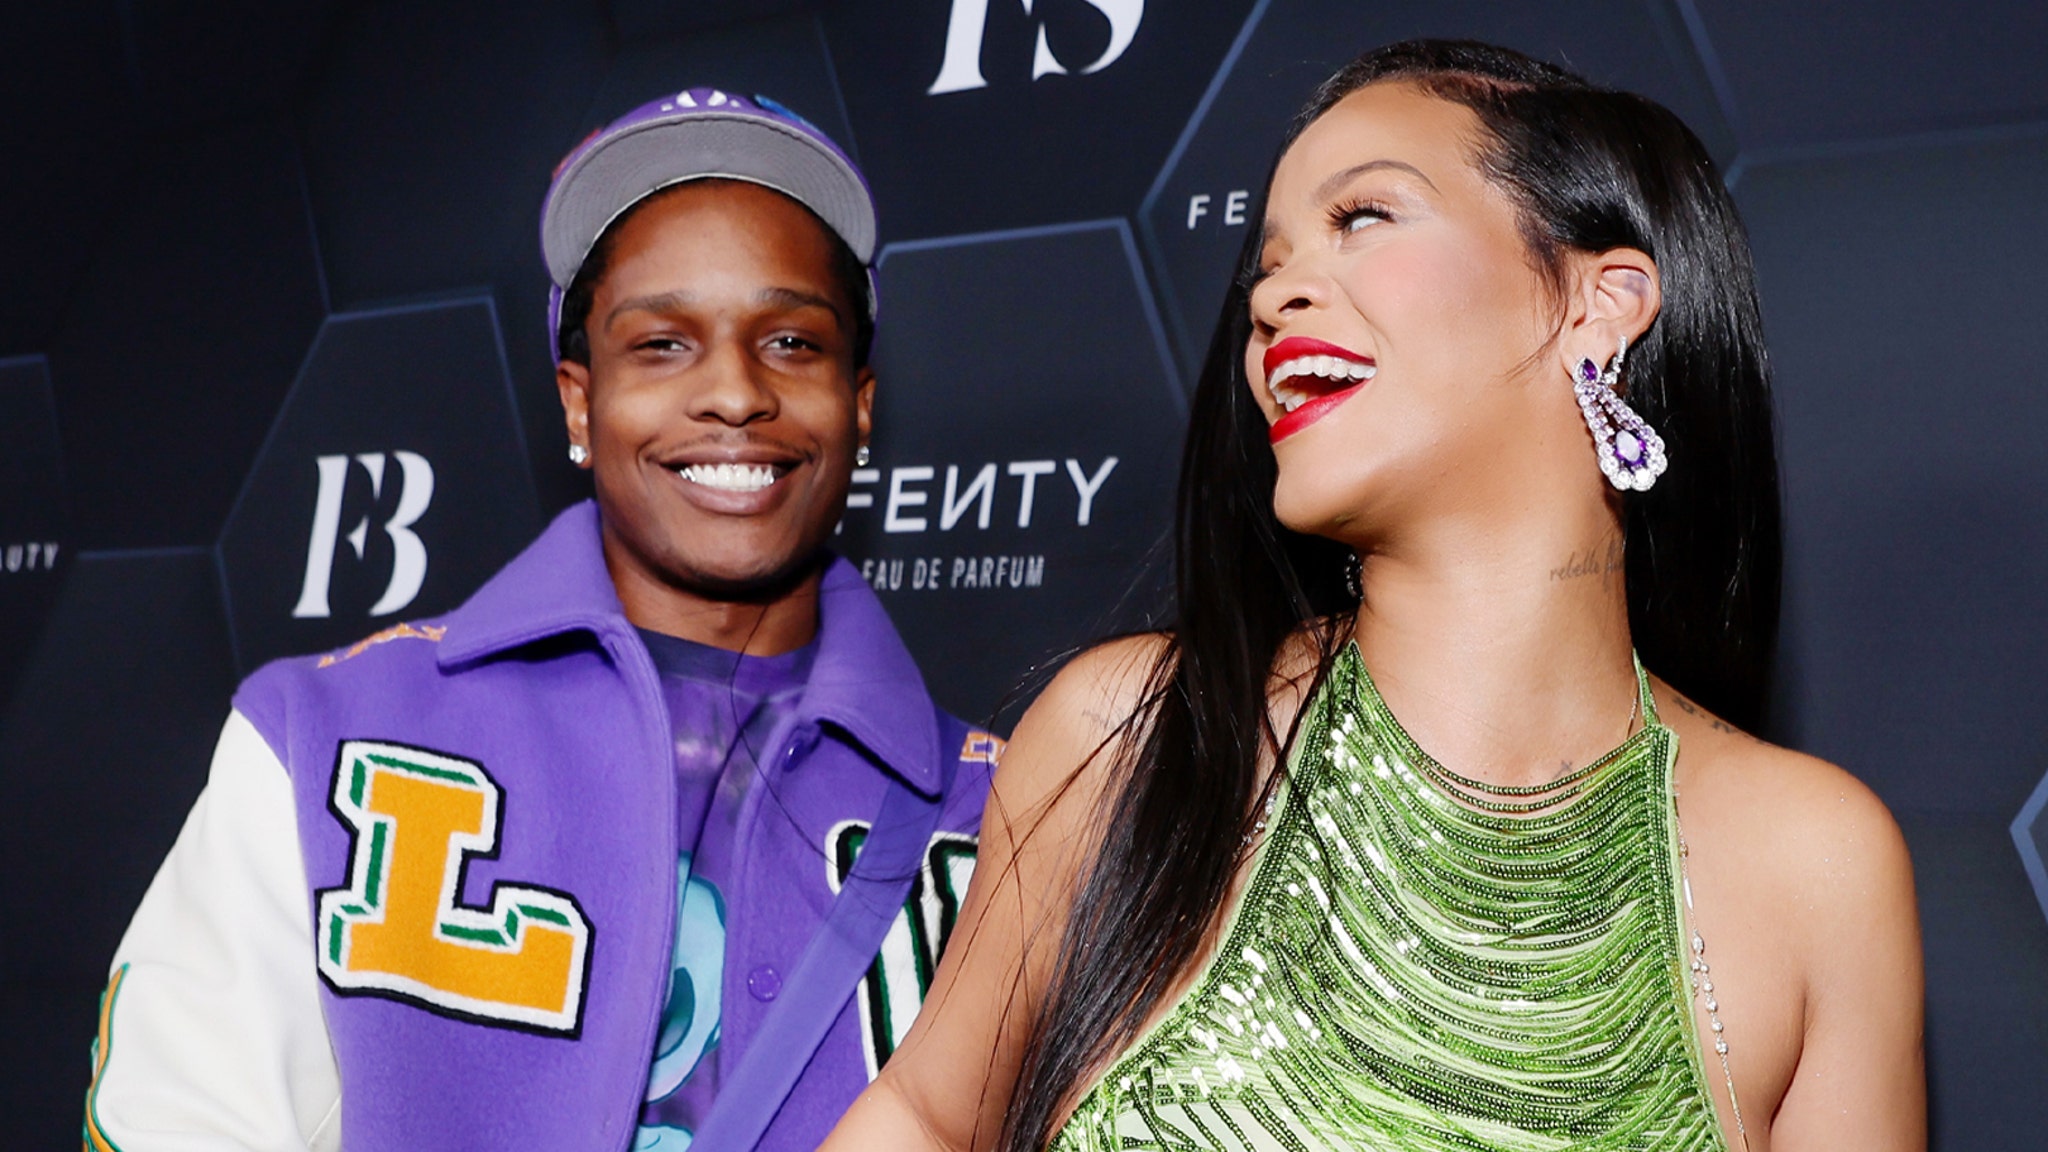 Rihanna News on X: Rihanna and A$AP Rocky at the Louis Vuitton